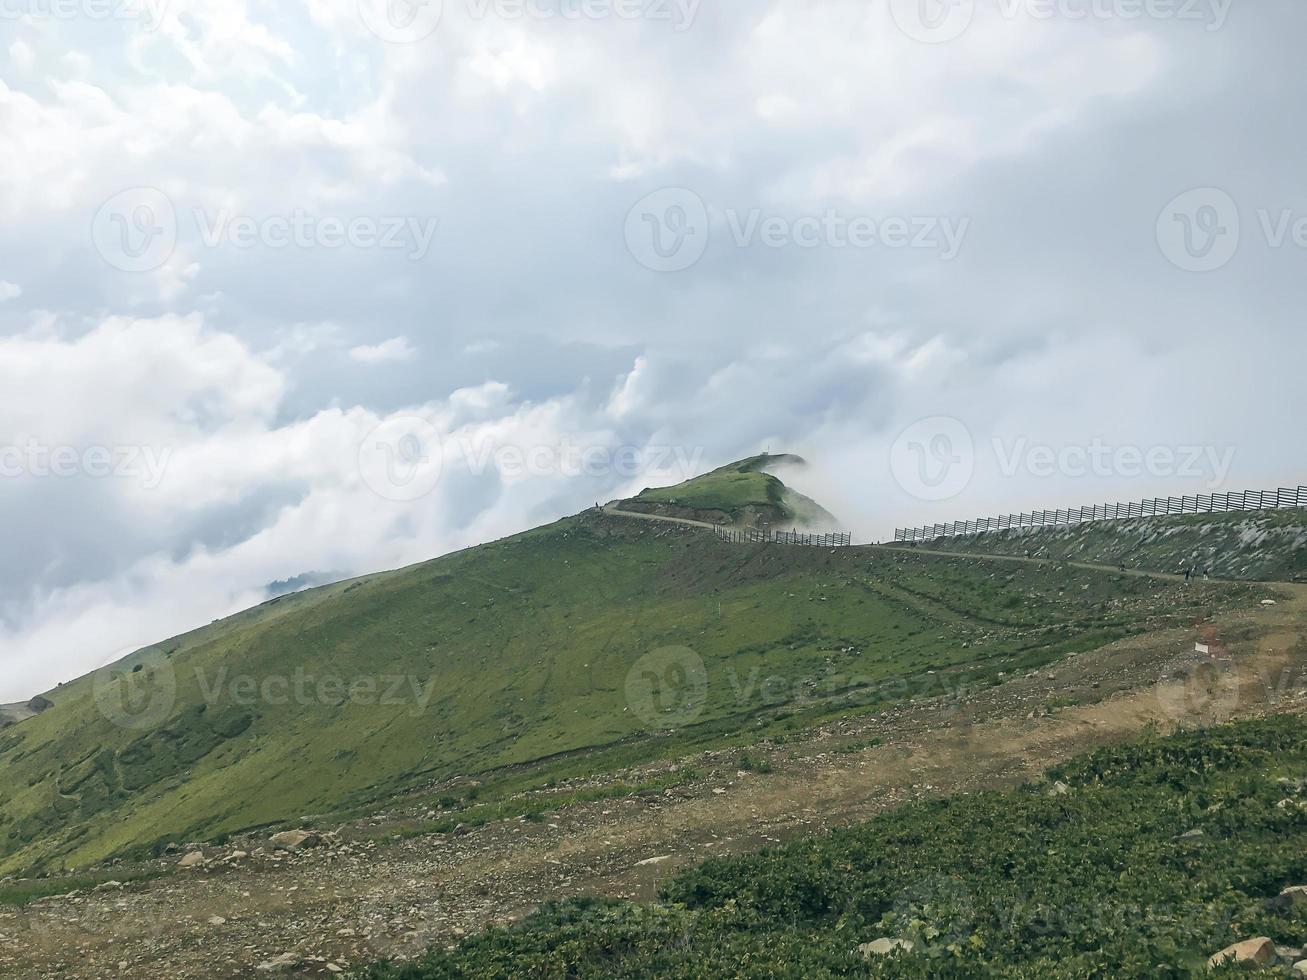 Kaukasus bergen gewikkeld in wolken bij Roza Khutor, Rusland foto